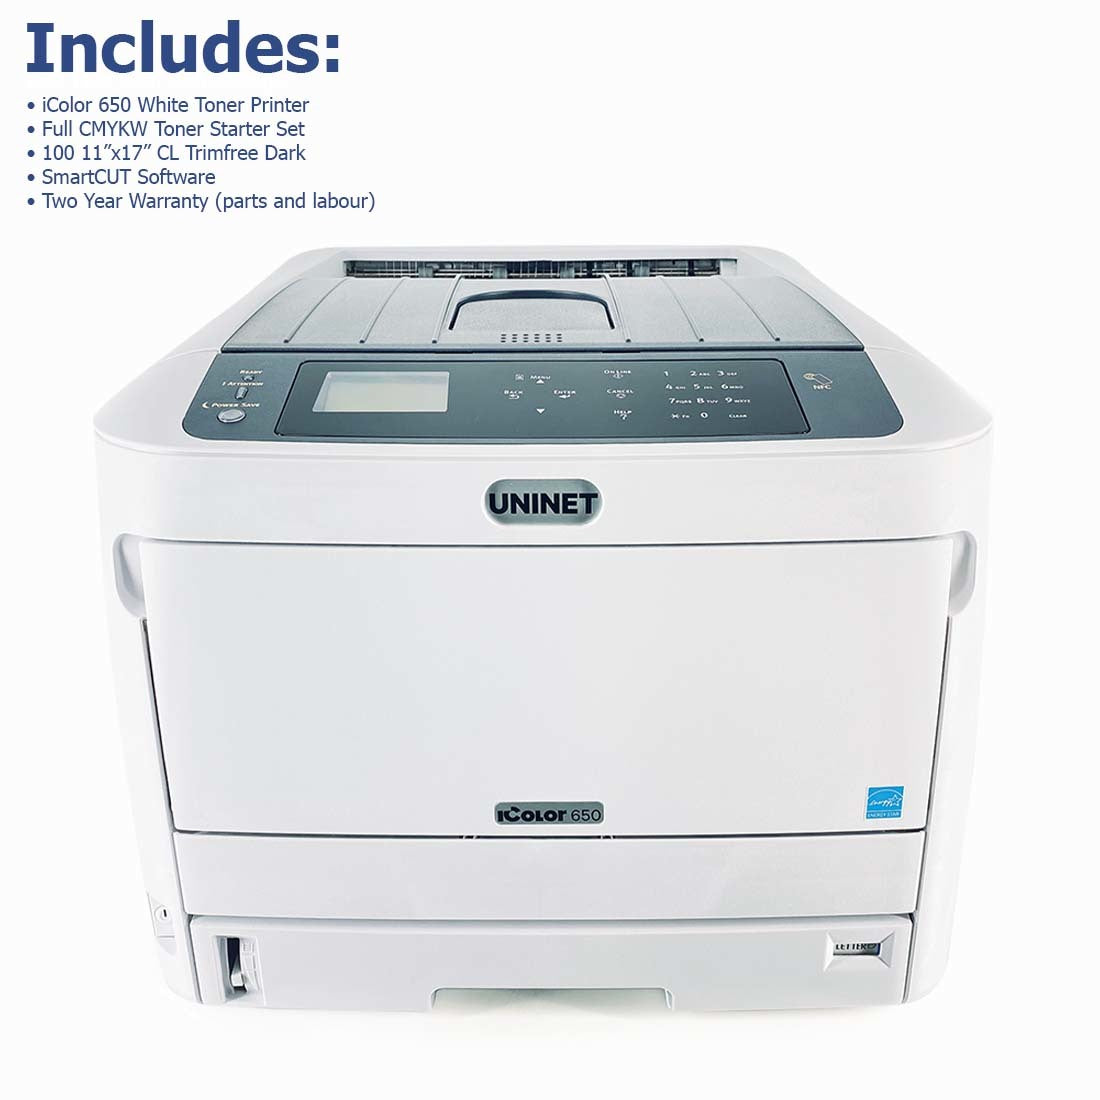 iColor 650 White Toner Printer - Joto Imaging Supplies Canada